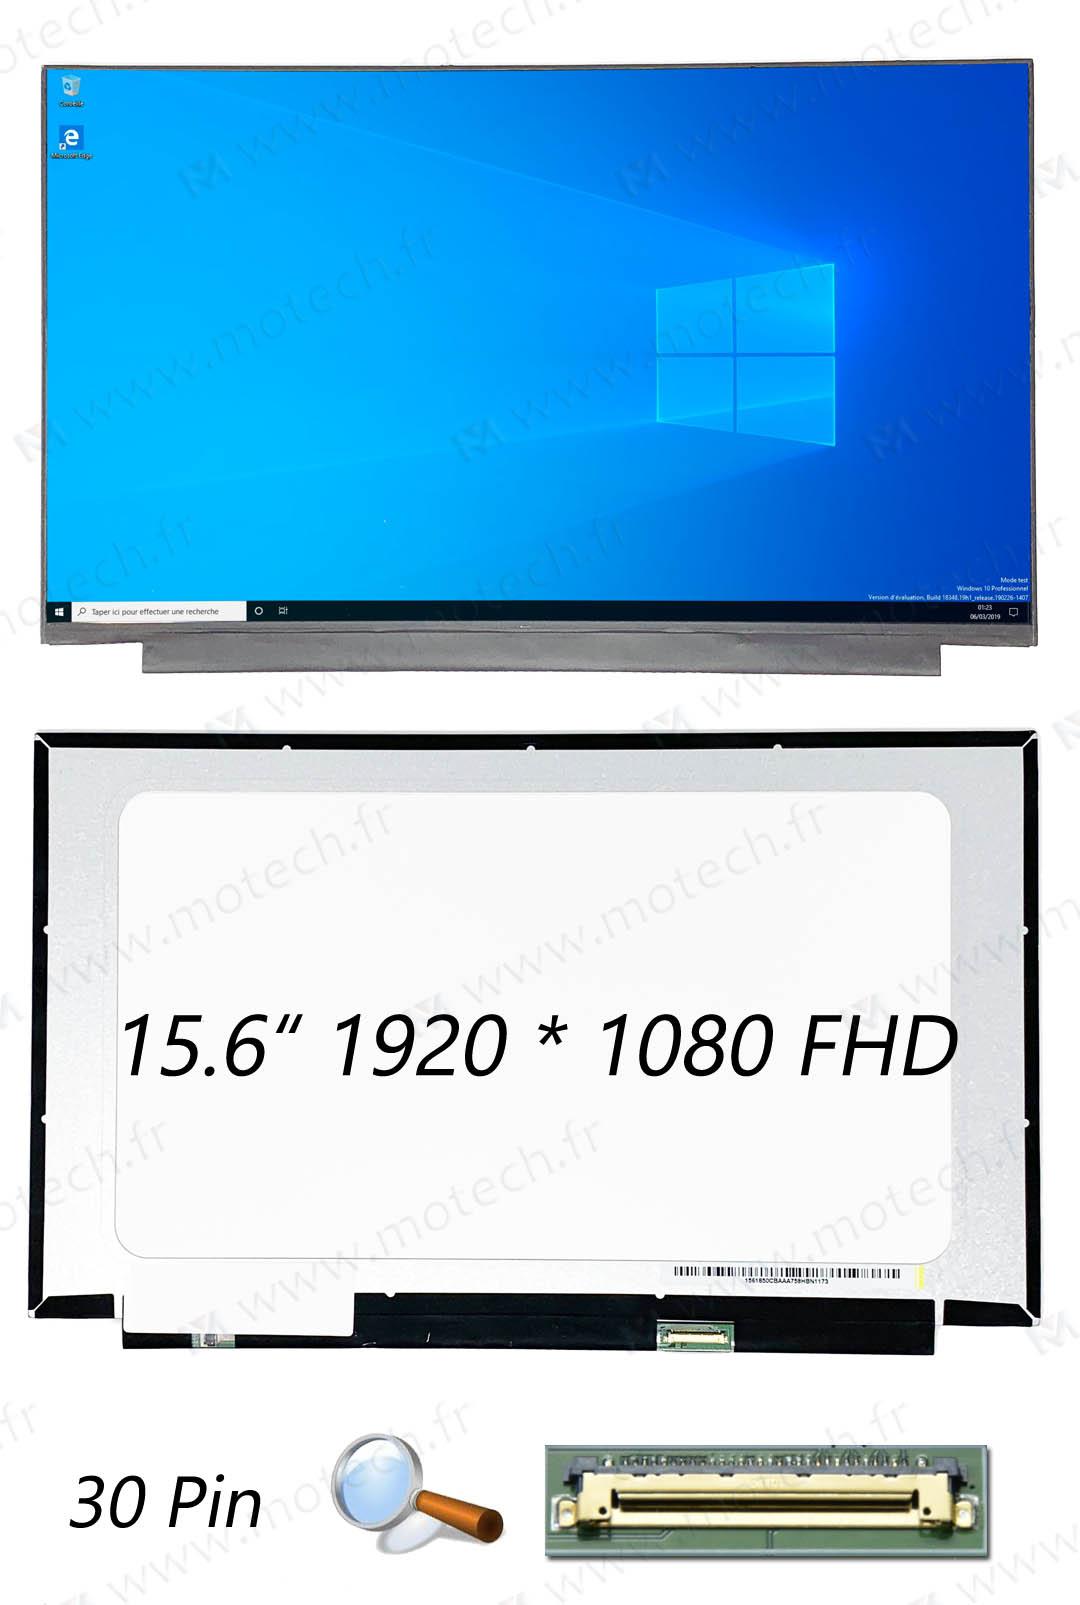 华硕 Asus S530F 屏幕, 华硕 Asus S530F 显示屏, 华硕 Asus S530F 液晶屏, 华硕 Asus S530F 显示器, 华硕 Asus S530F 液晶屏幕, 华硕 Asus S530F LCD,